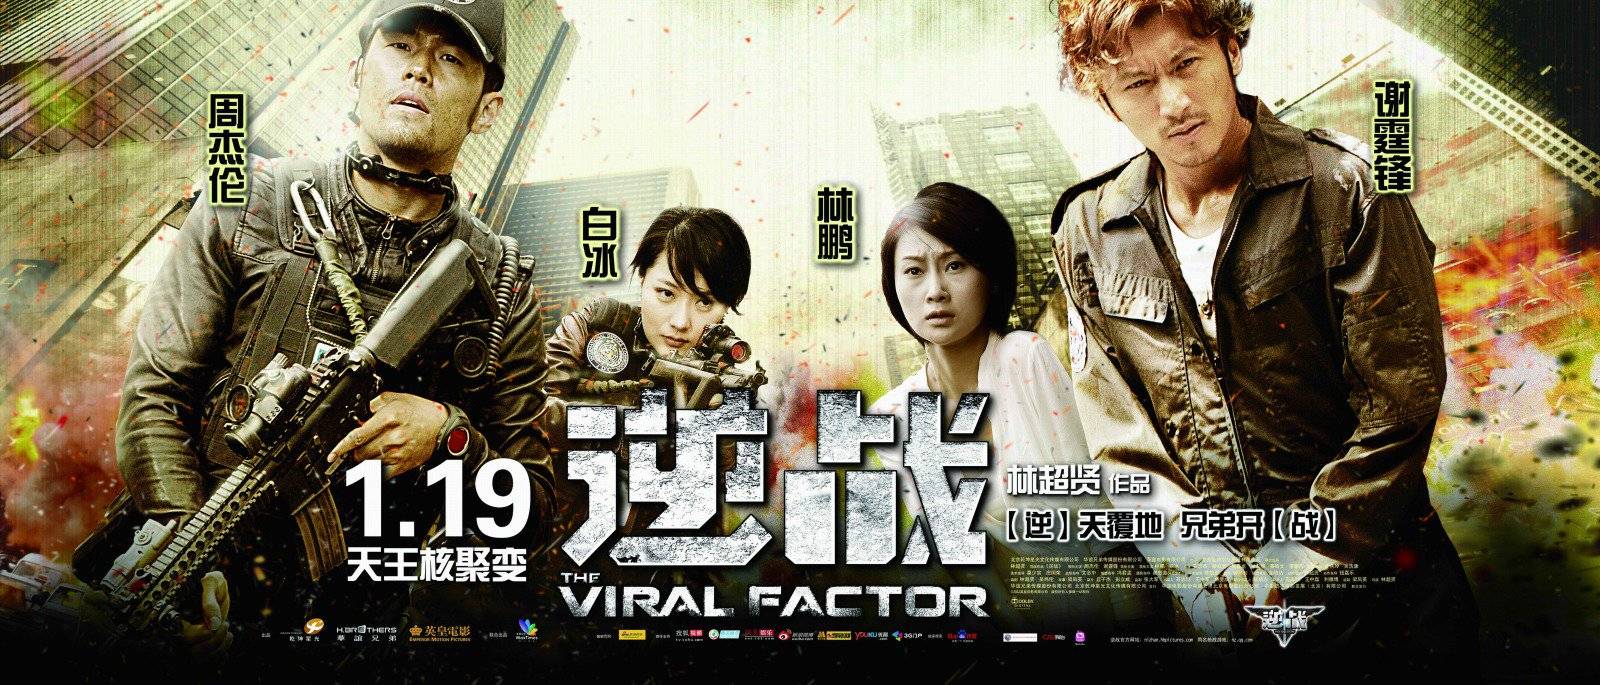 Xem Phim Nghịch Chiến, The Viral Factor 2012